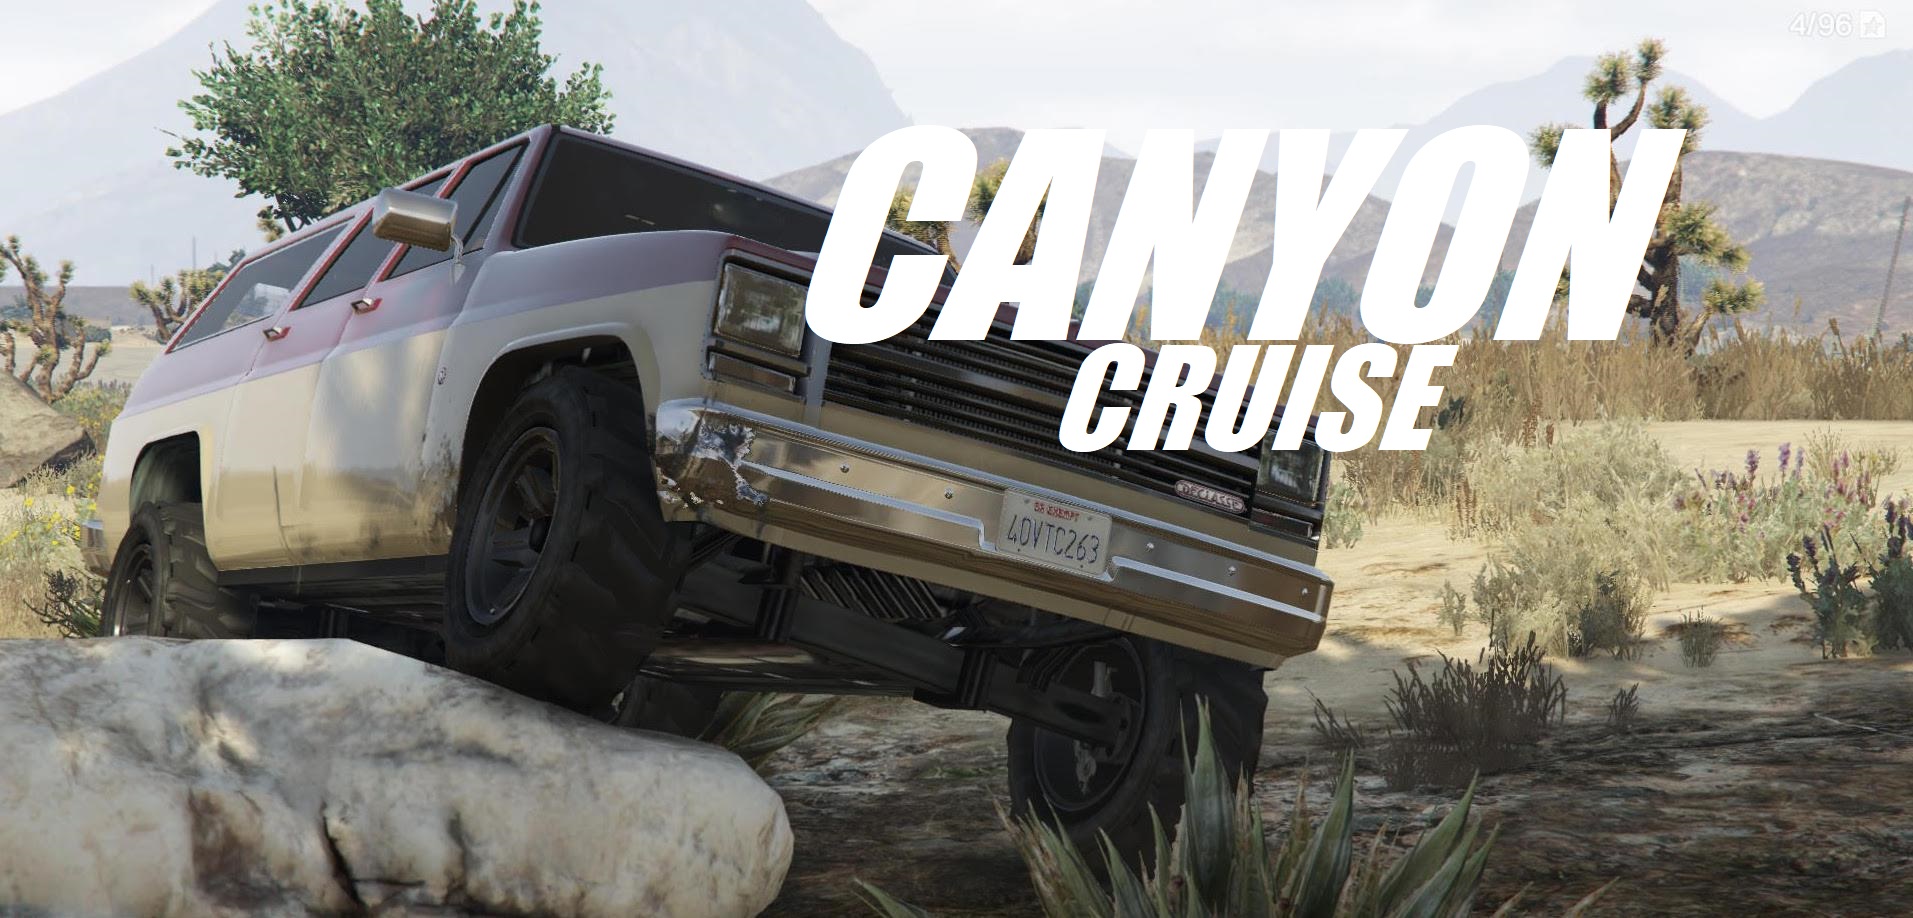 Canyon Cruise cover image